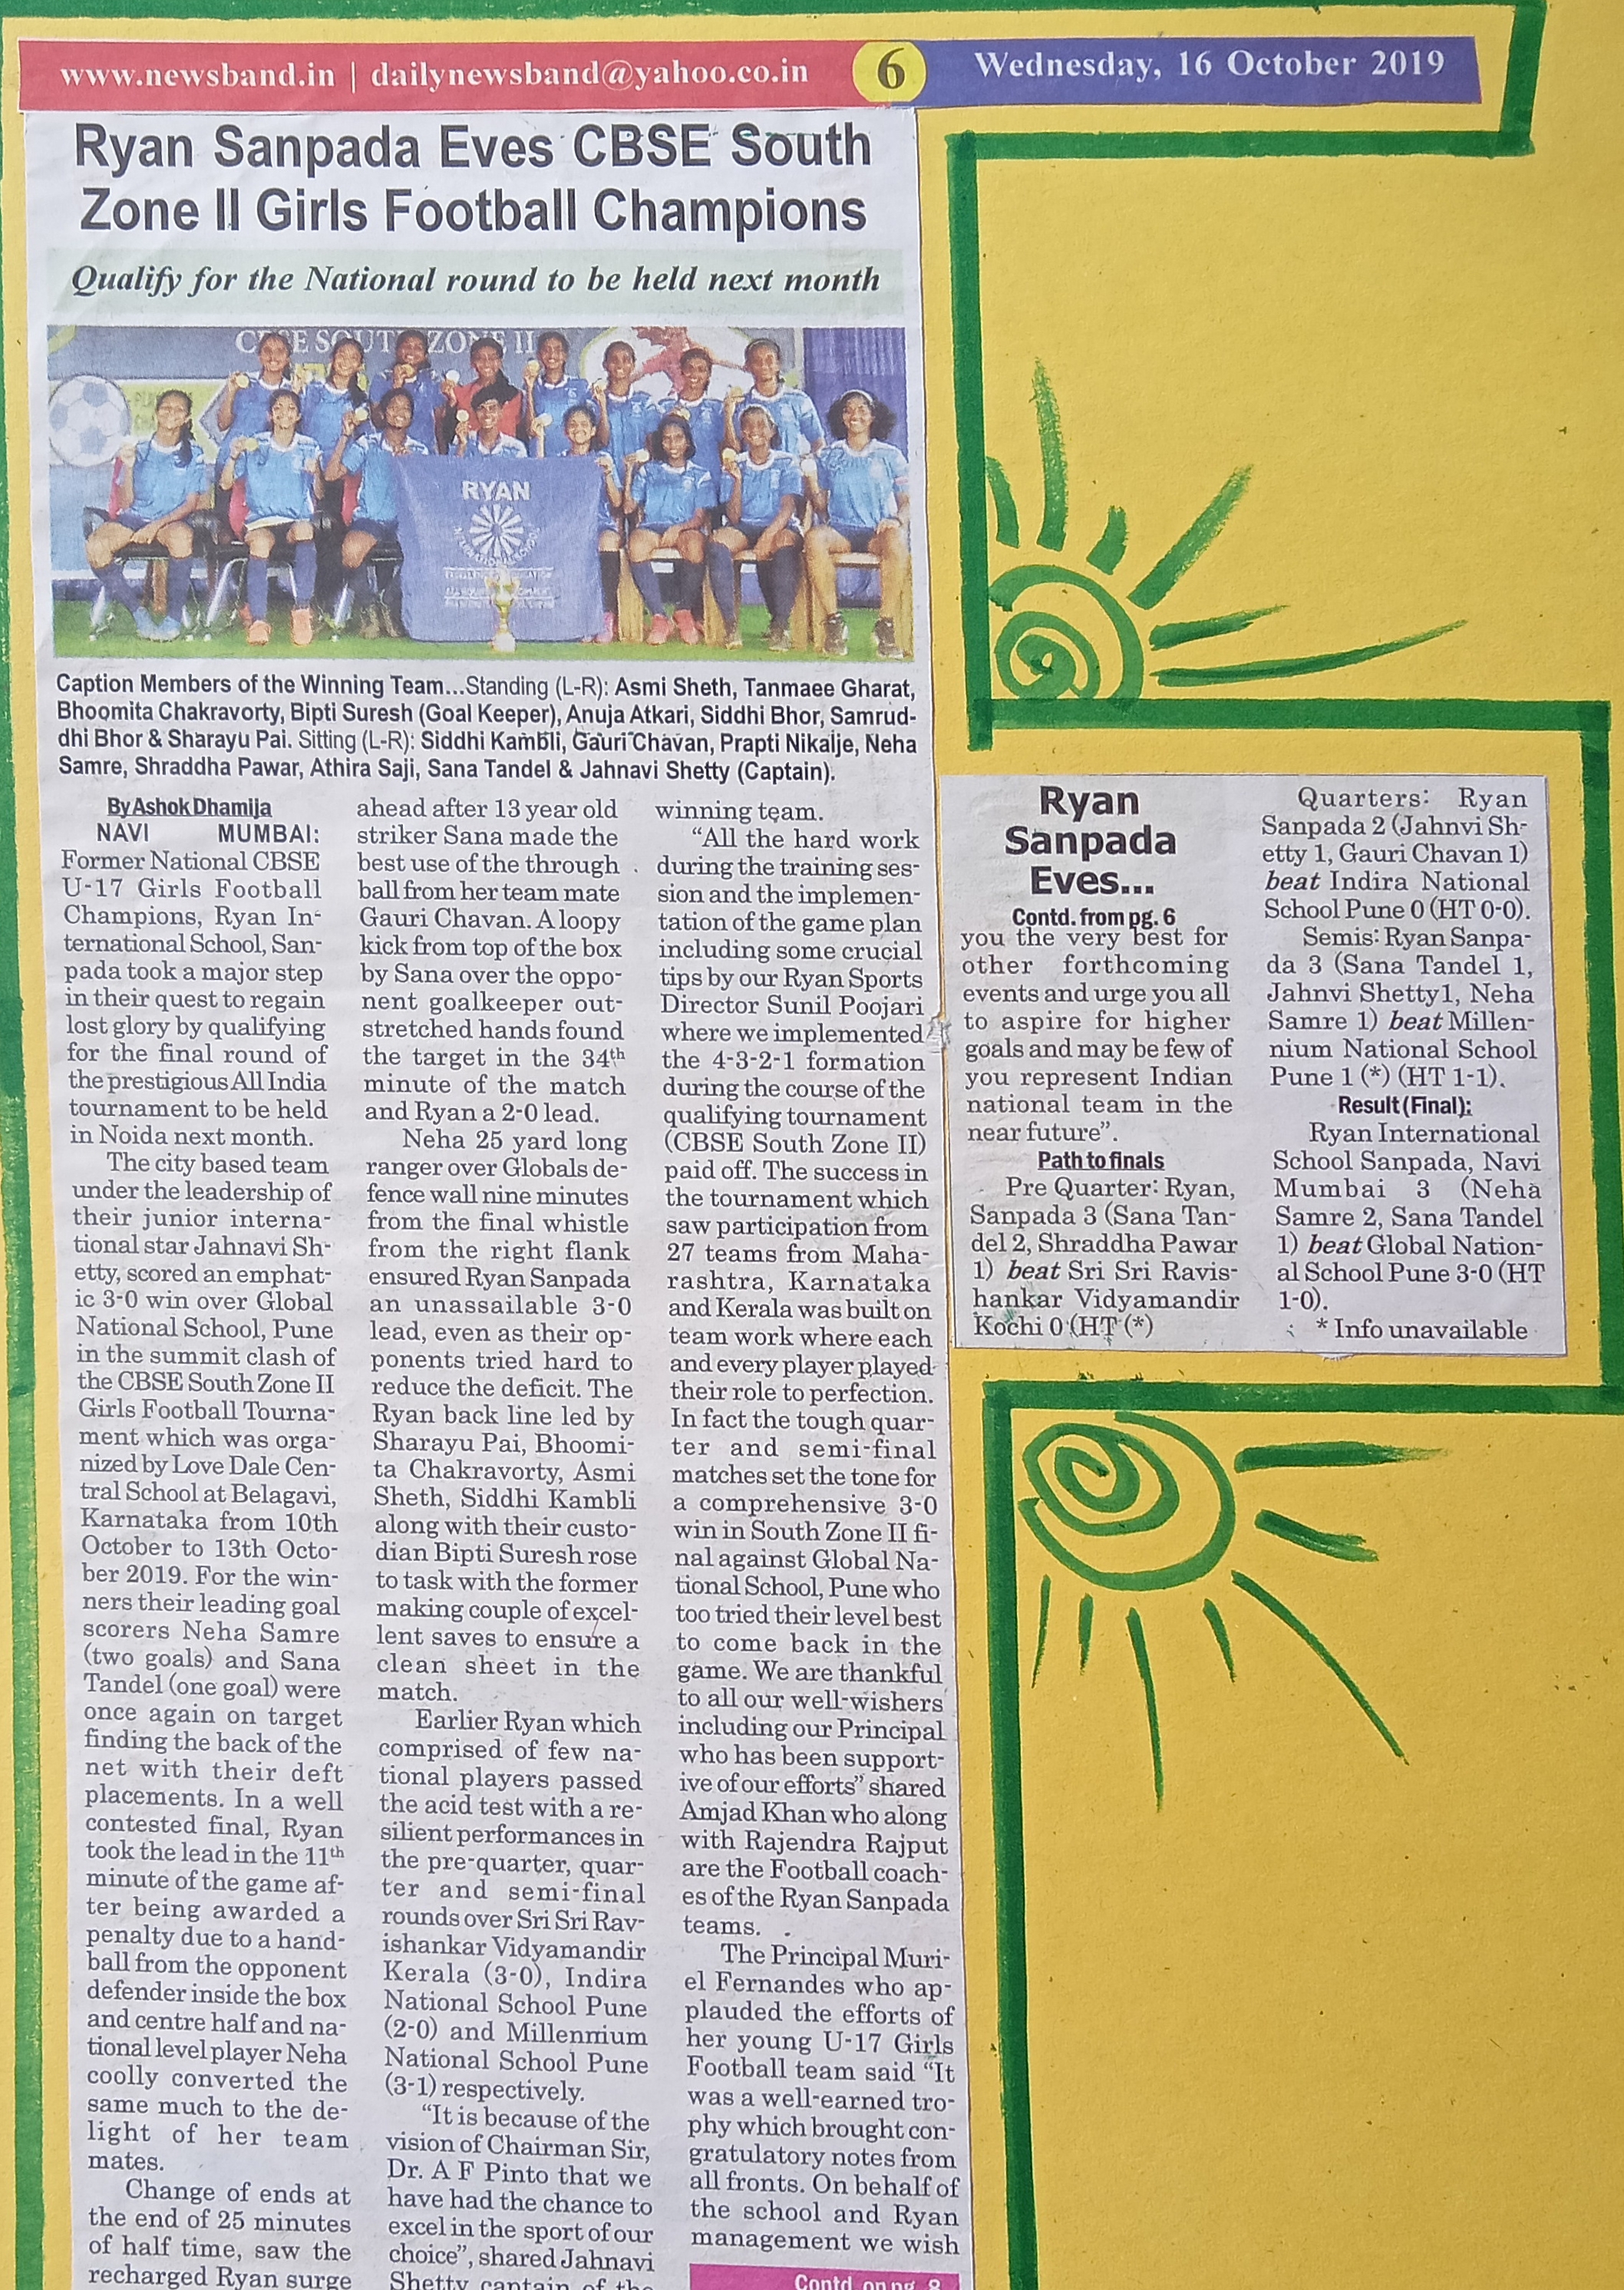 U/17 Girls Football Team was featured in Newsband - Ryan International School, Sanpada